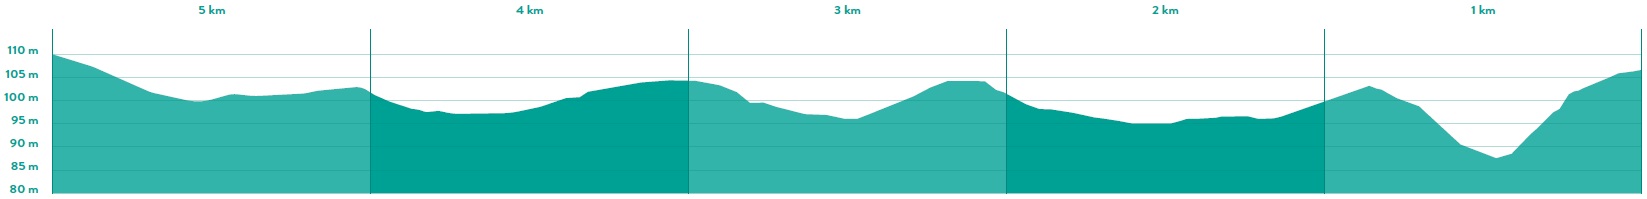 Hhenprofil Ronde van Limburg 2021, letzte 5 km